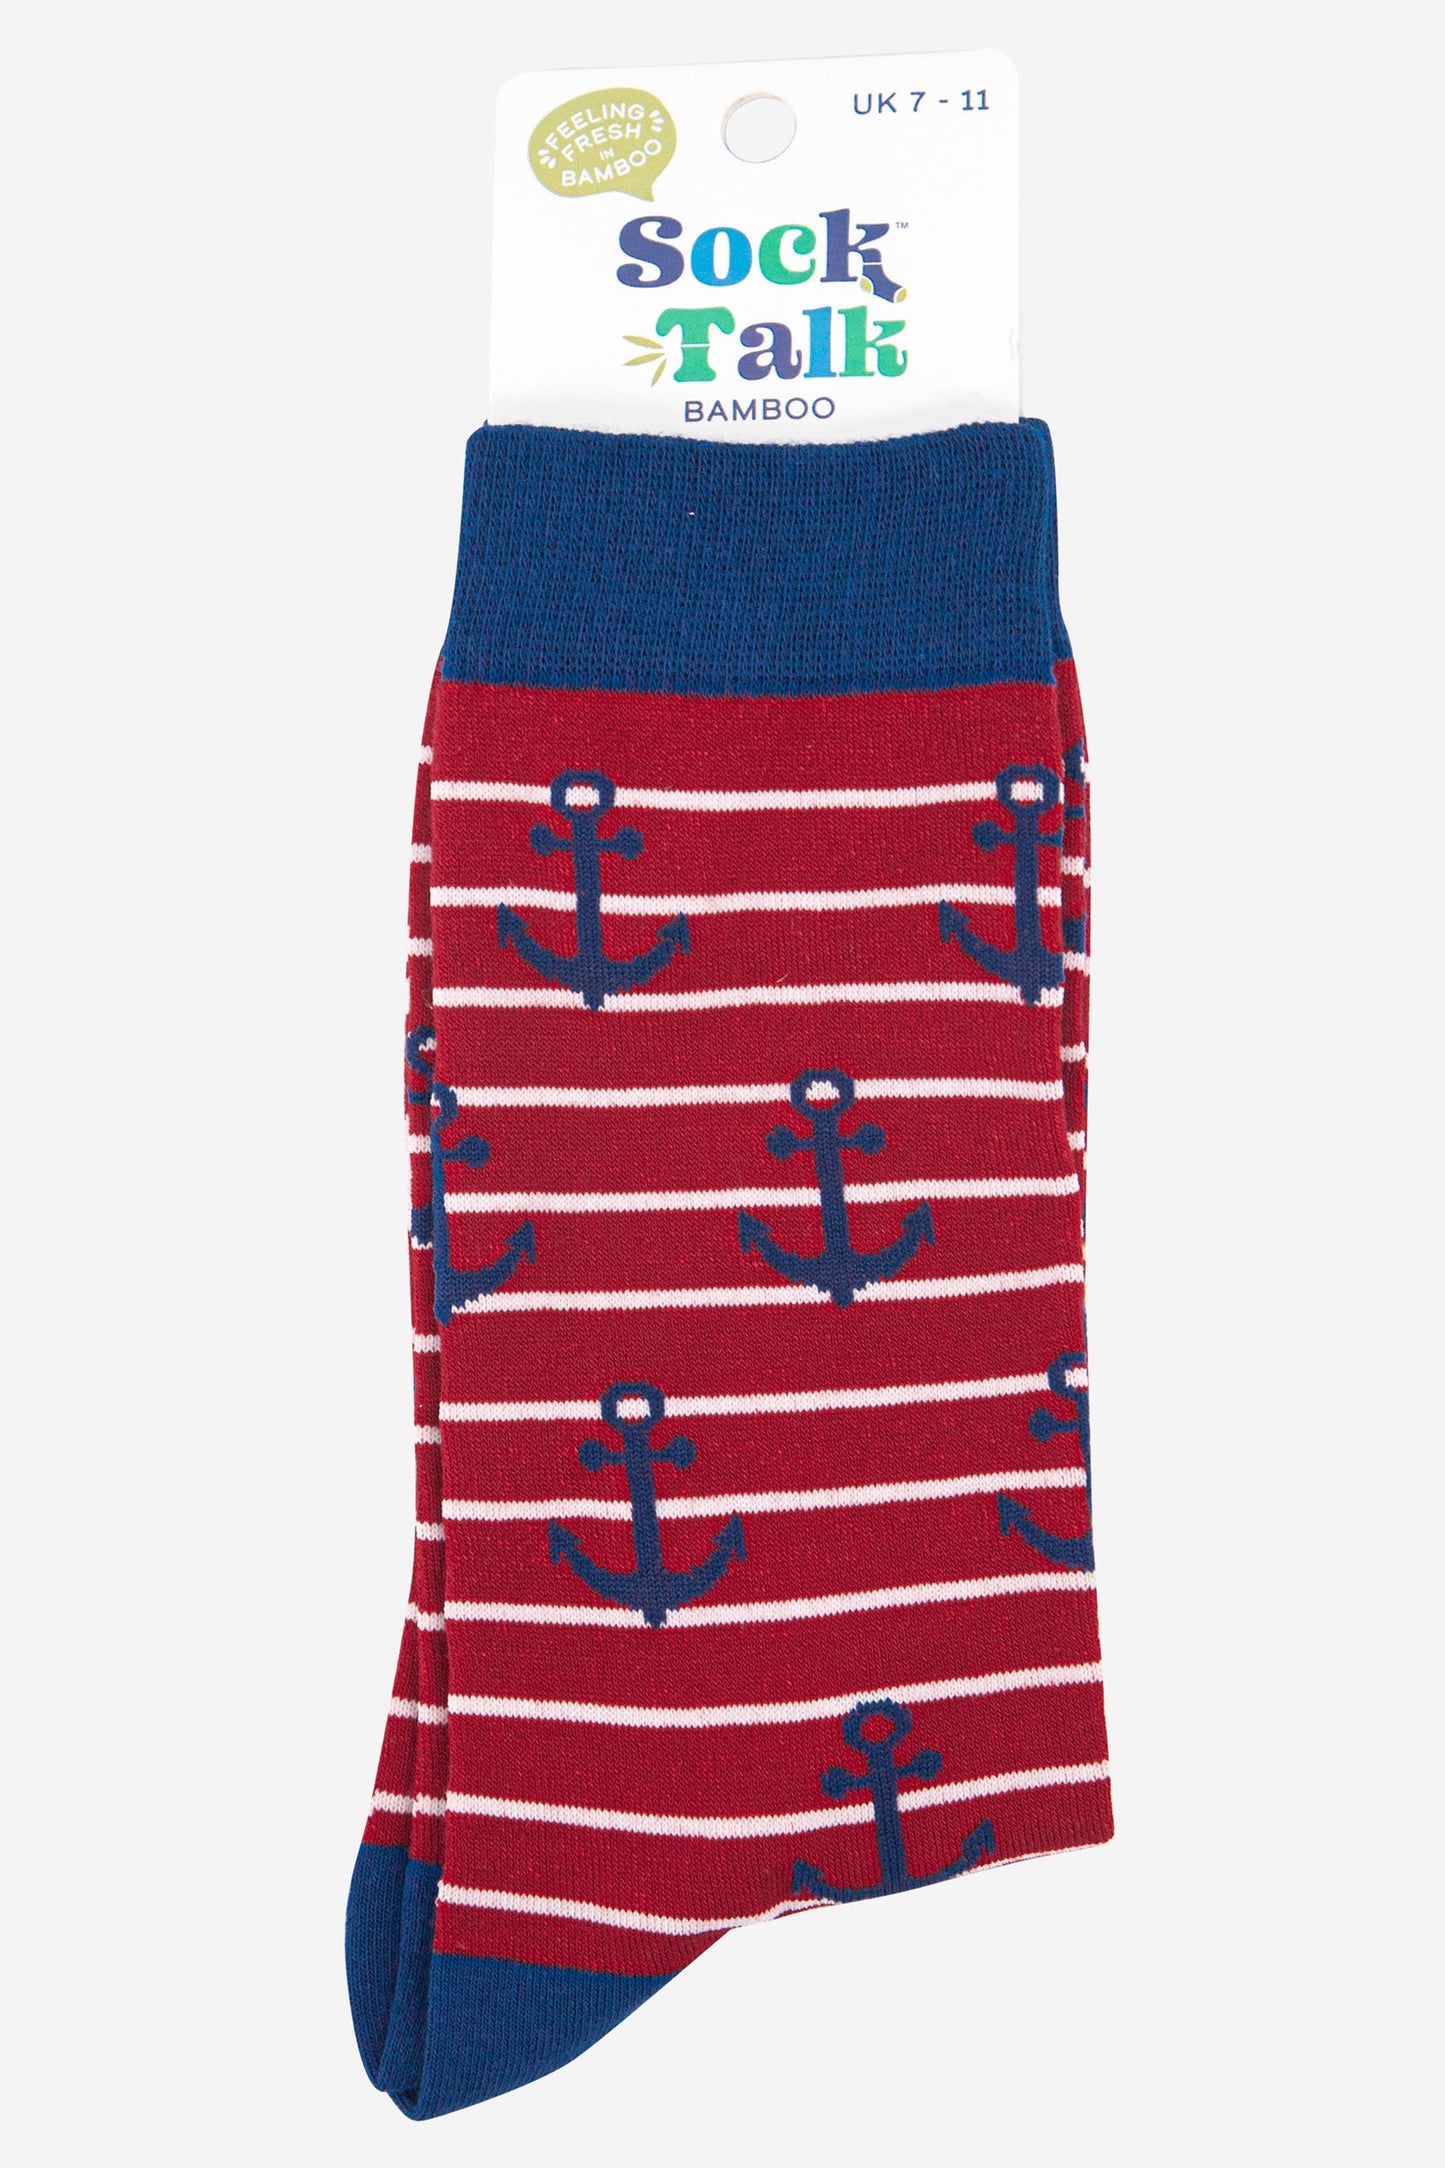 mens striped nautical anchor socks uk size 7-11